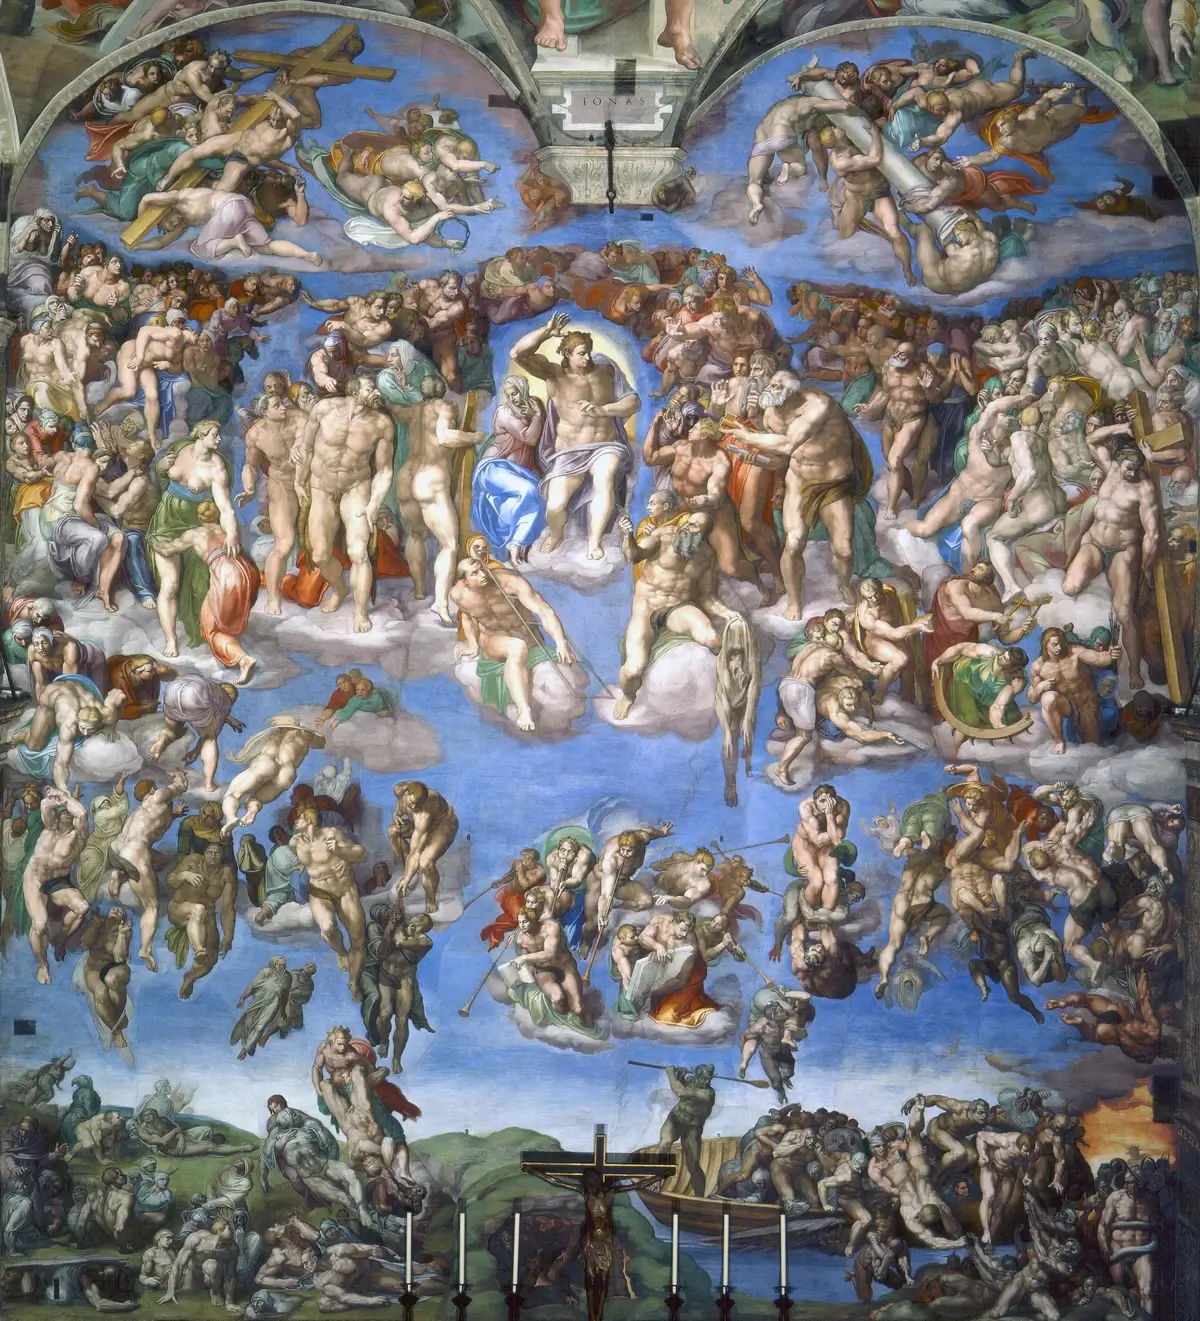 Michelangelo Buonarroti, "The Last Judgment", from 1536 until 1541